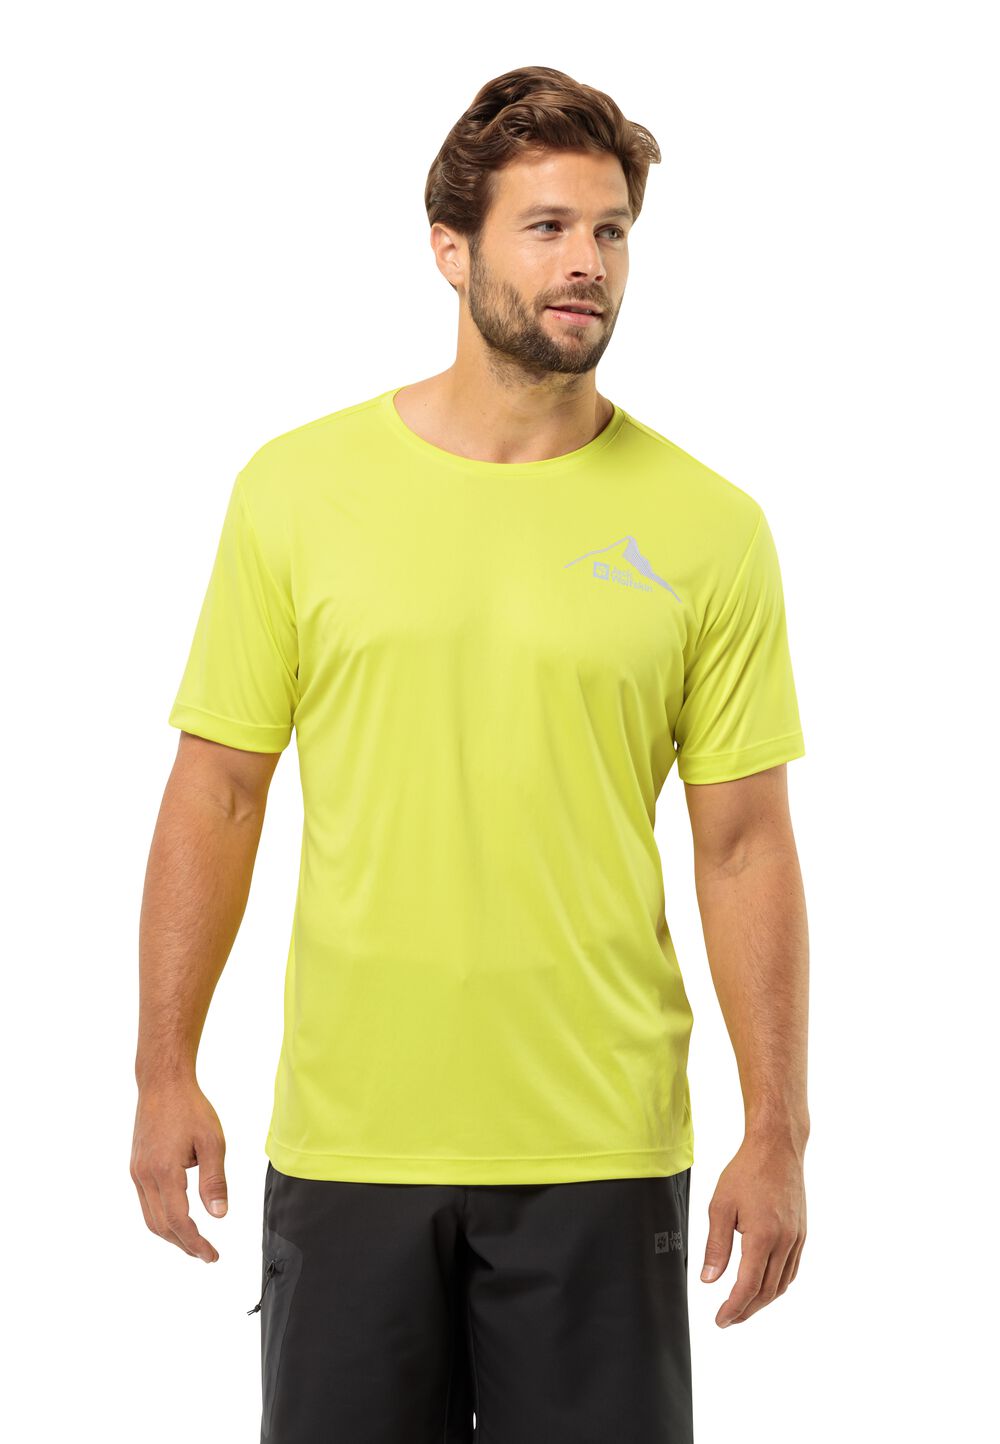 Jack Wolfskin Peak Graphic T-Shirt Men Functioneel shirt Heren XXL oranje firefly